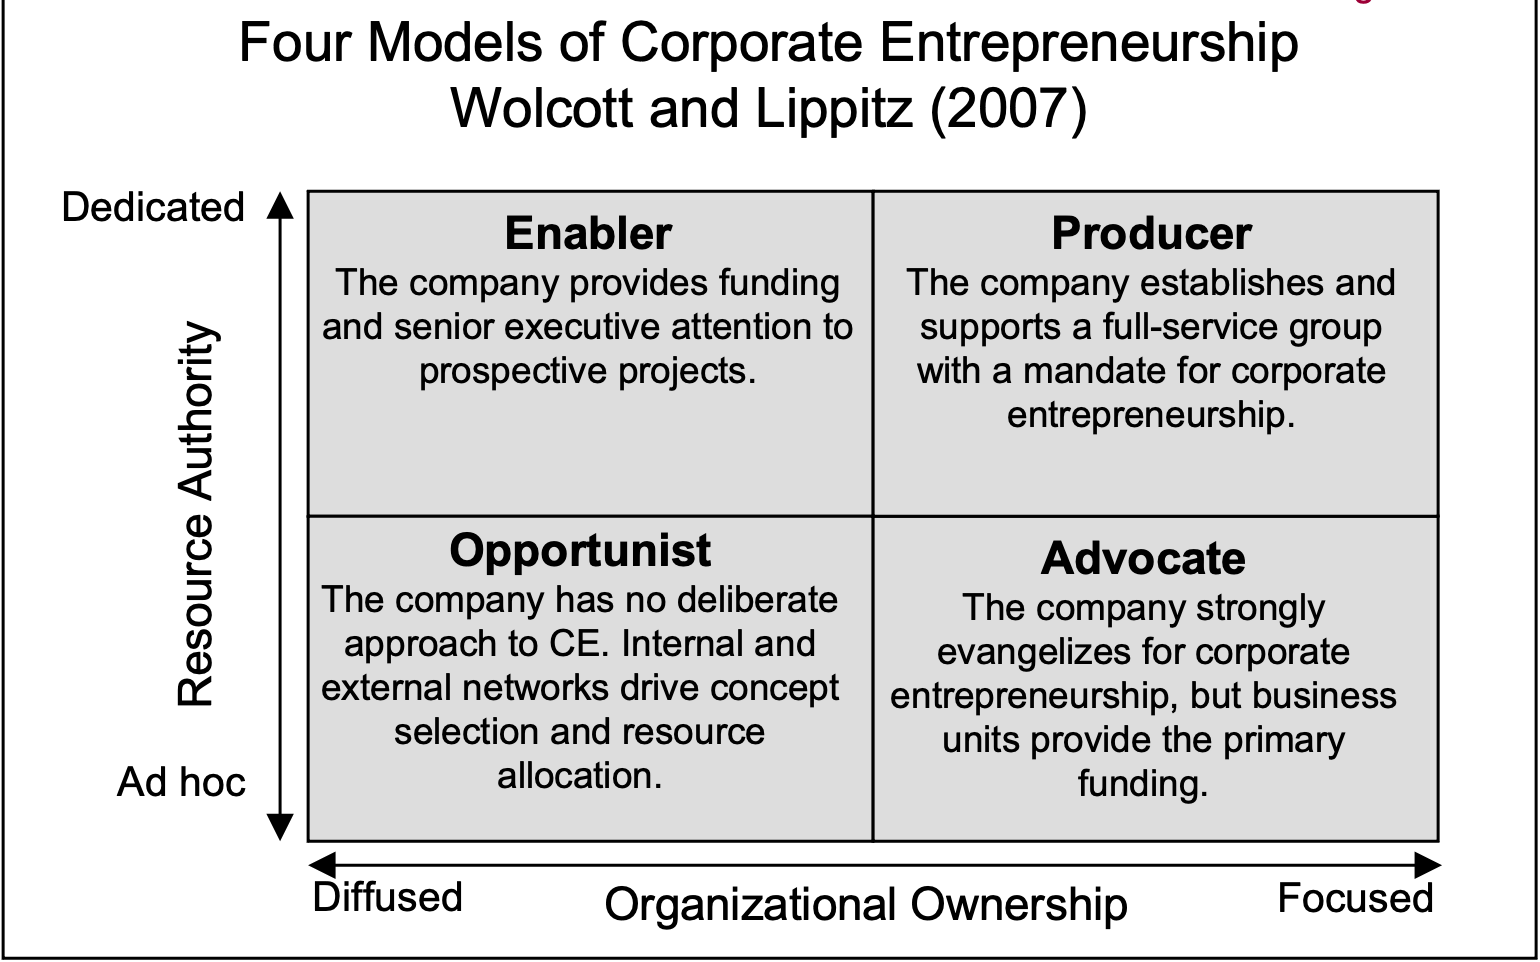 Corporate Entrepreneurship vs. Traditional Entrepreneurship